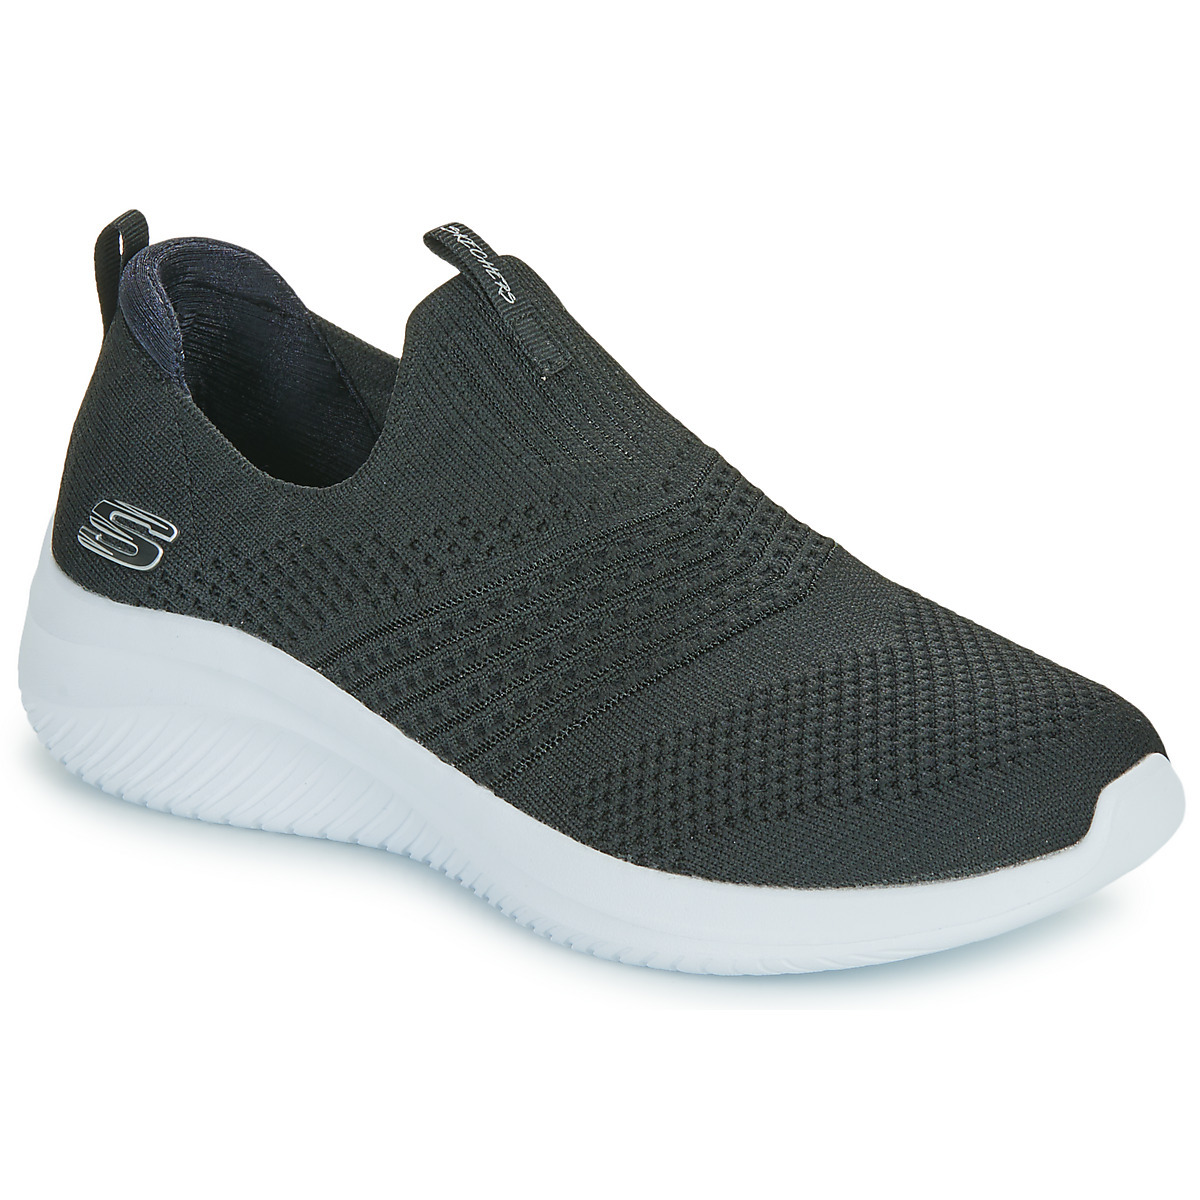 Pantofi Femei Pantofi Slip on Skechers ULTRA FLEX 3.0 - CLASSY CHARM Negru